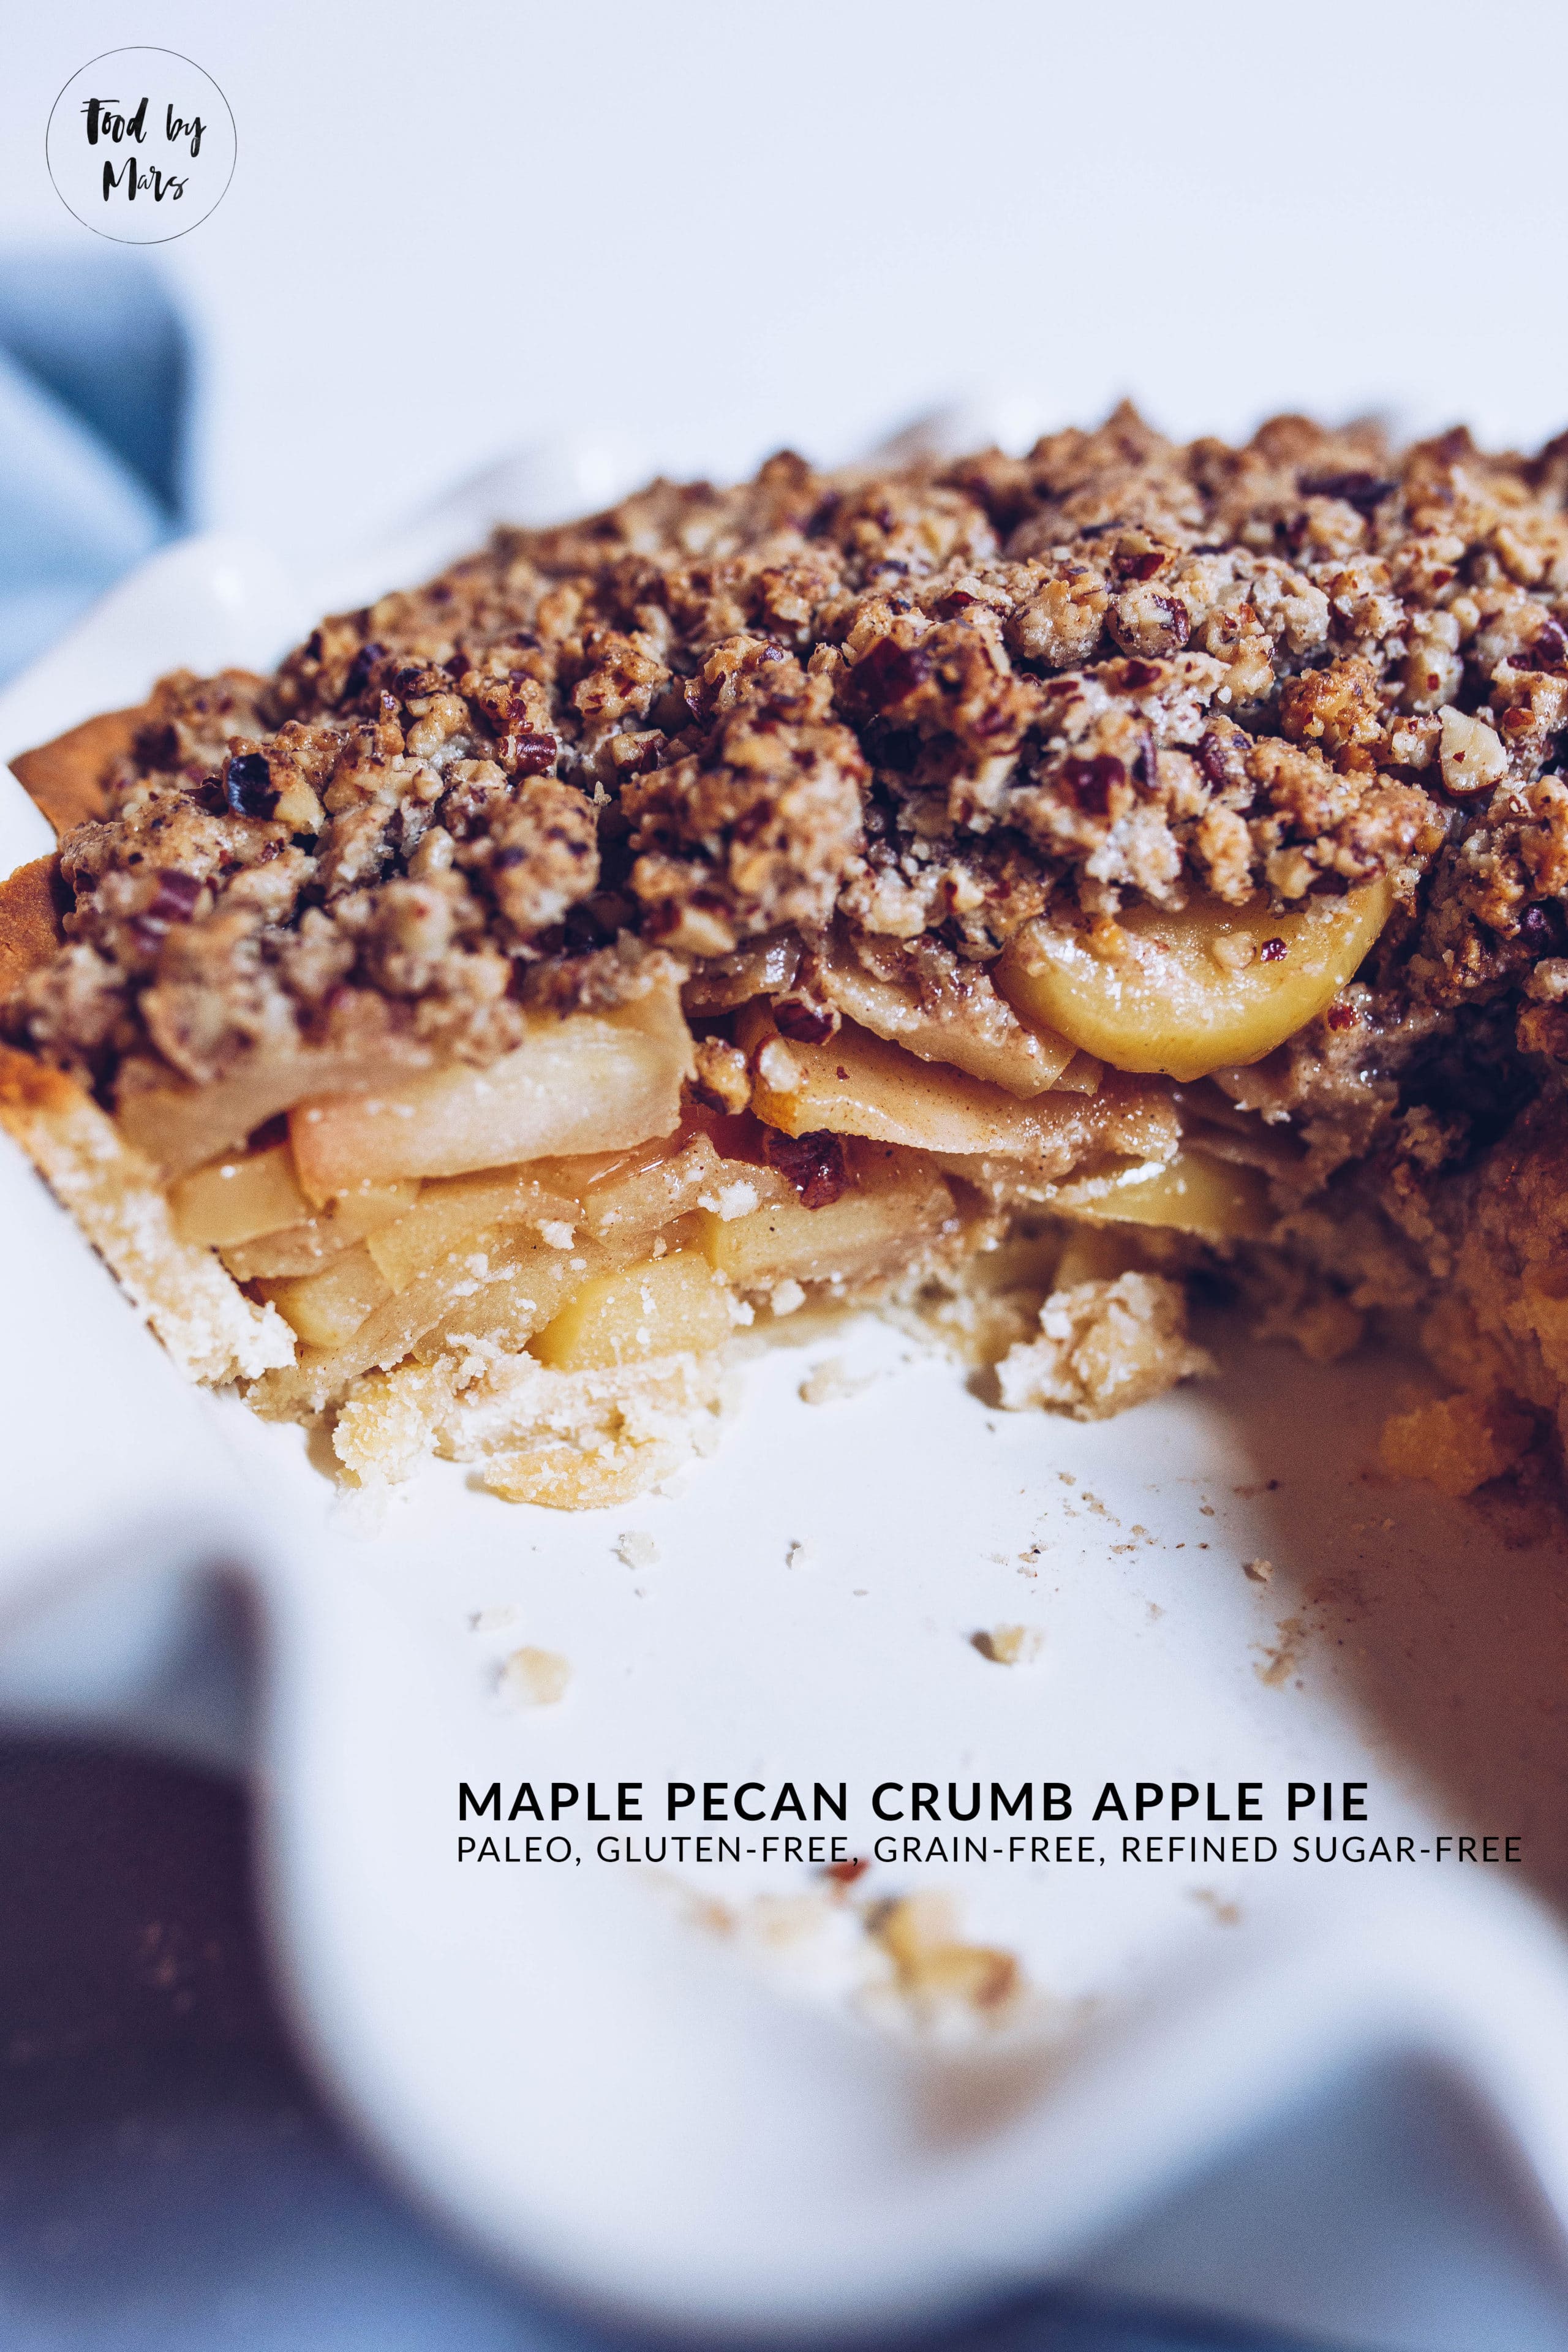 Paleo Maple Pecan Crumb Apple Pie via Food by Mars (paleo, gluten-free, refined sugar-free)